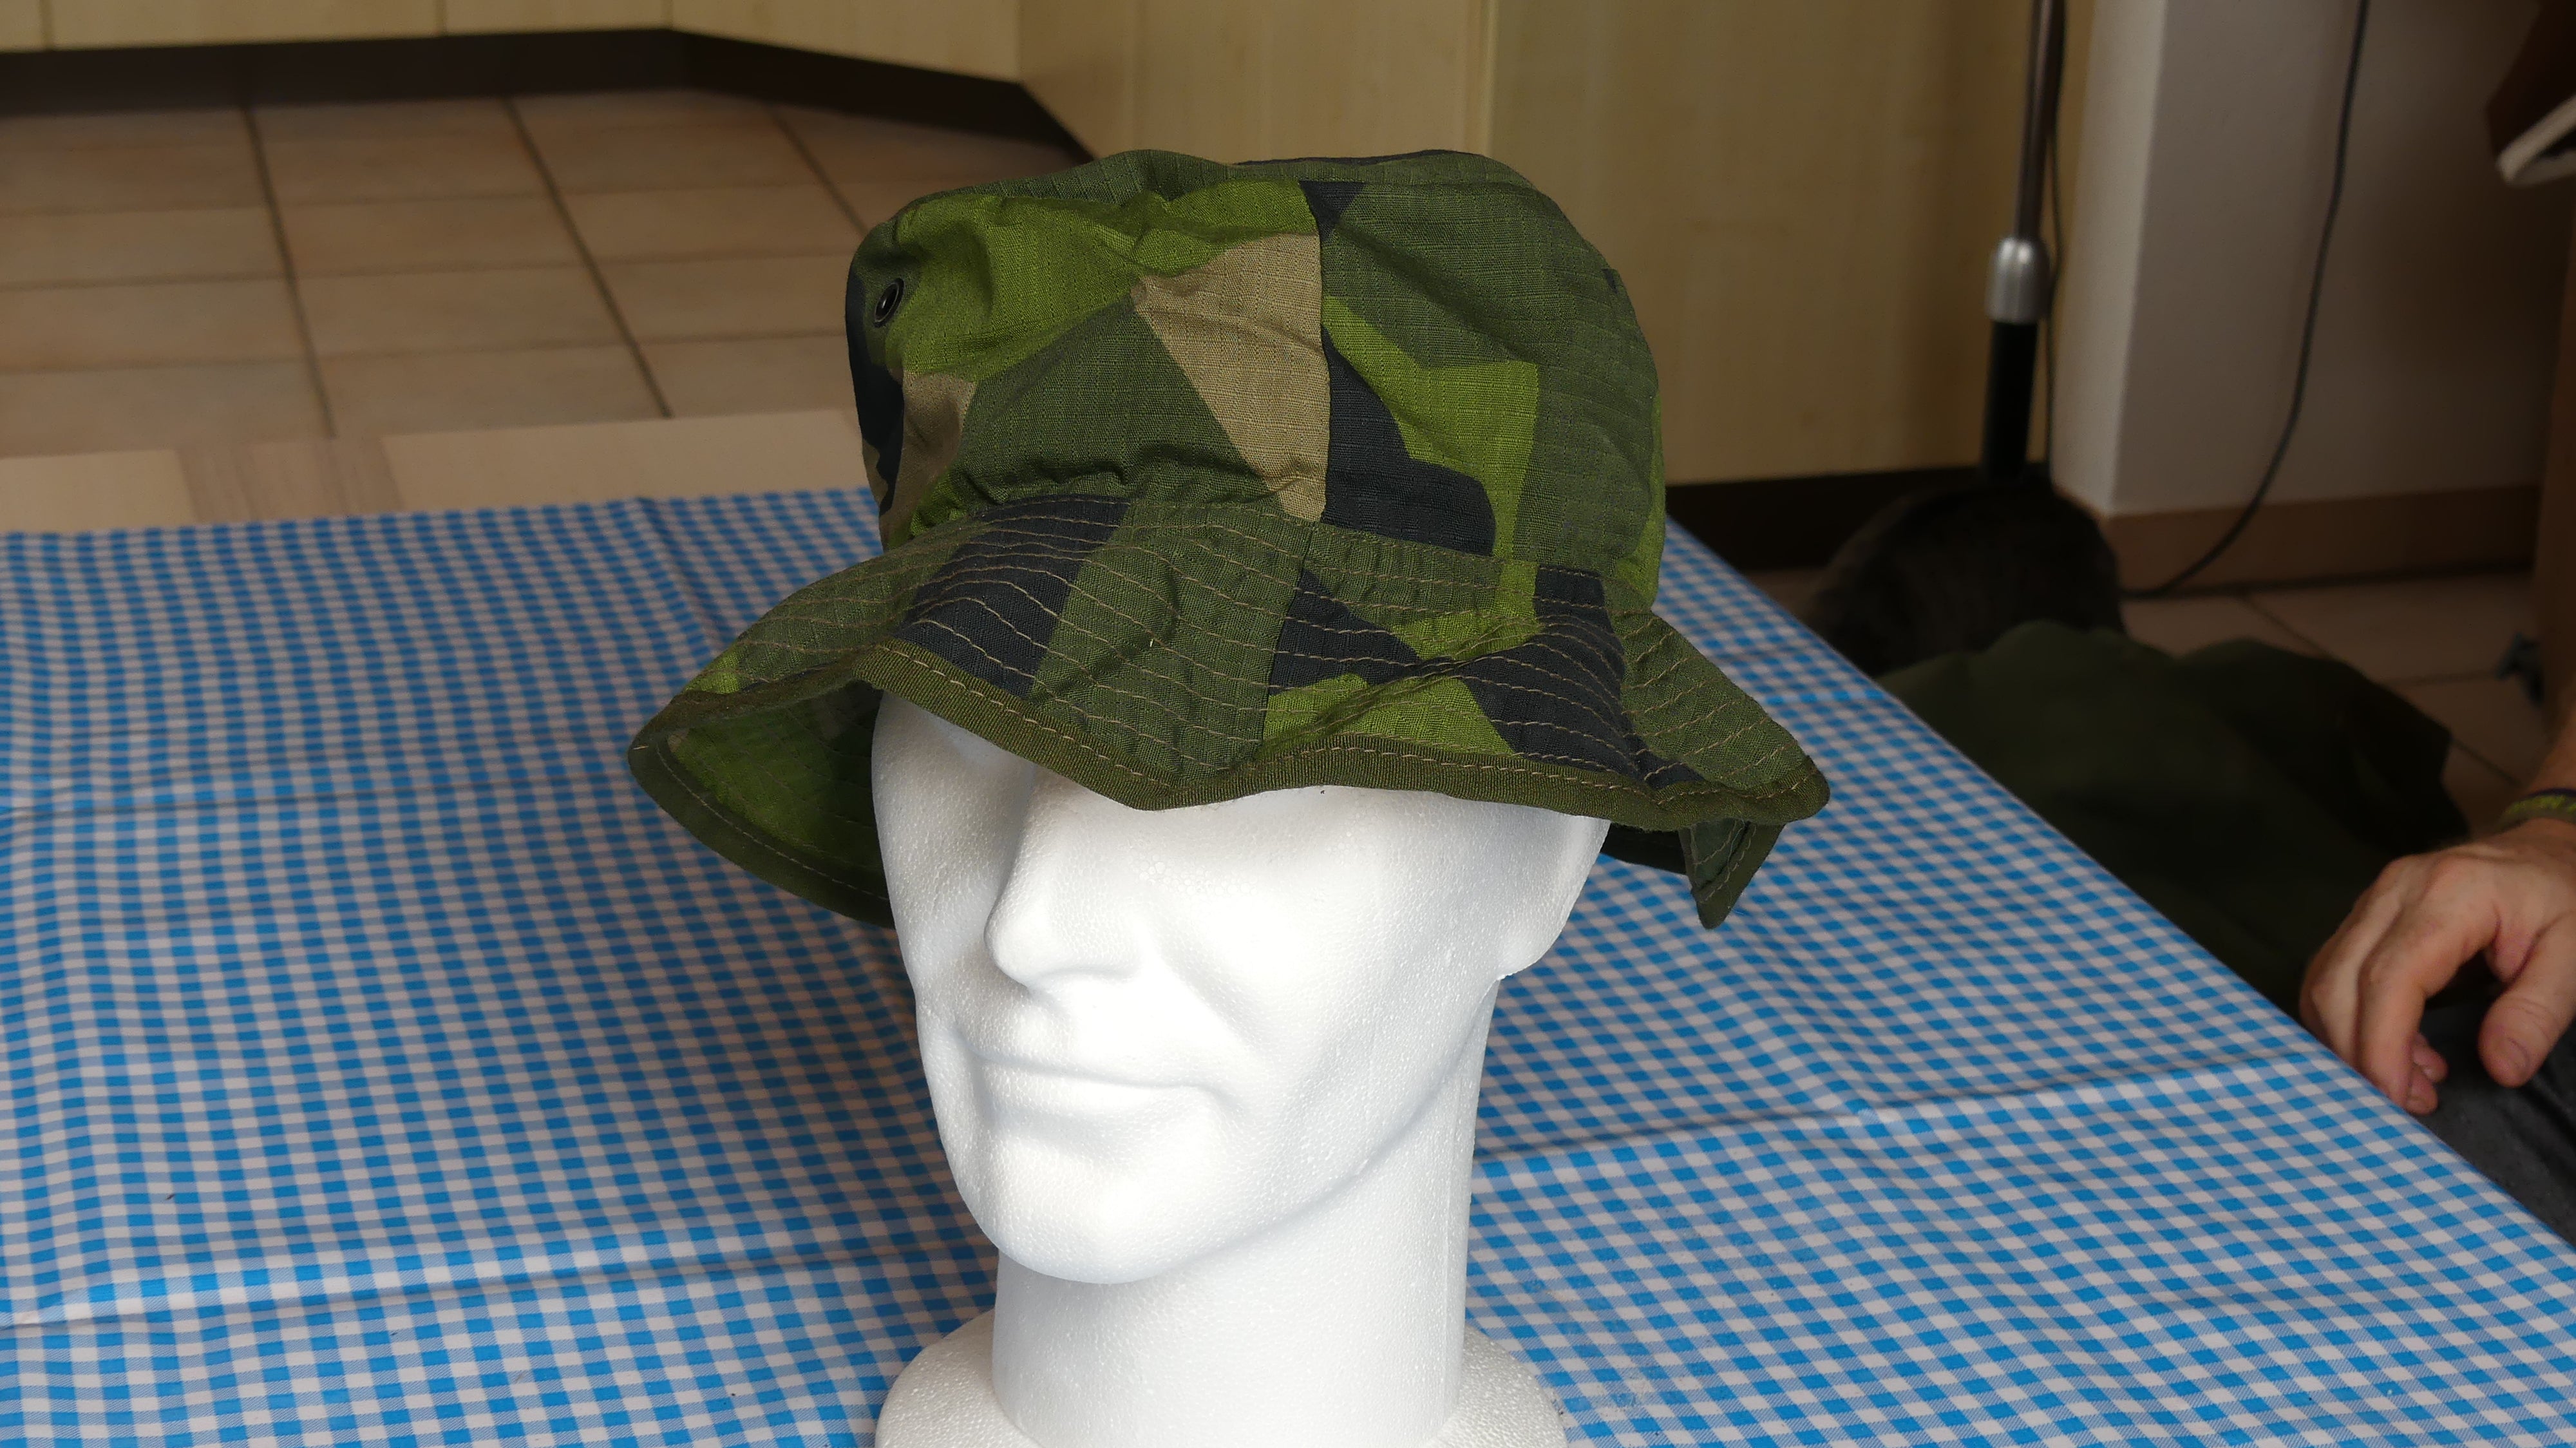 Spartan Joe's Bucket Hat - Camouflage at Spartan